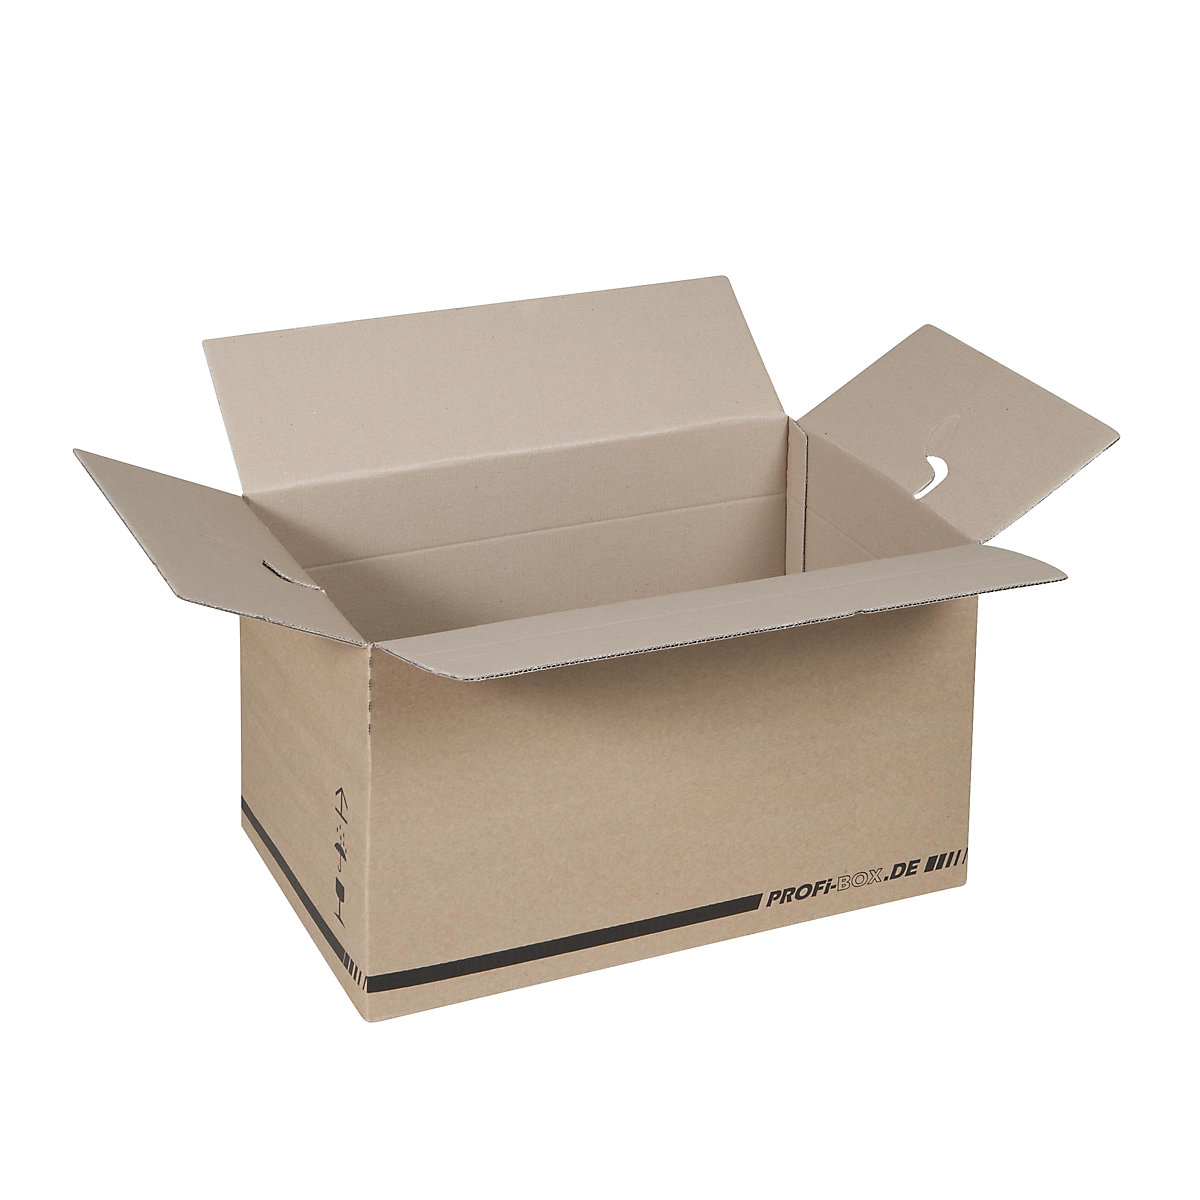  Cajas de cartón ondulado 10-22x10x10 - Nuevas para necesidades  de mudanza o envío : Productos de Oficina